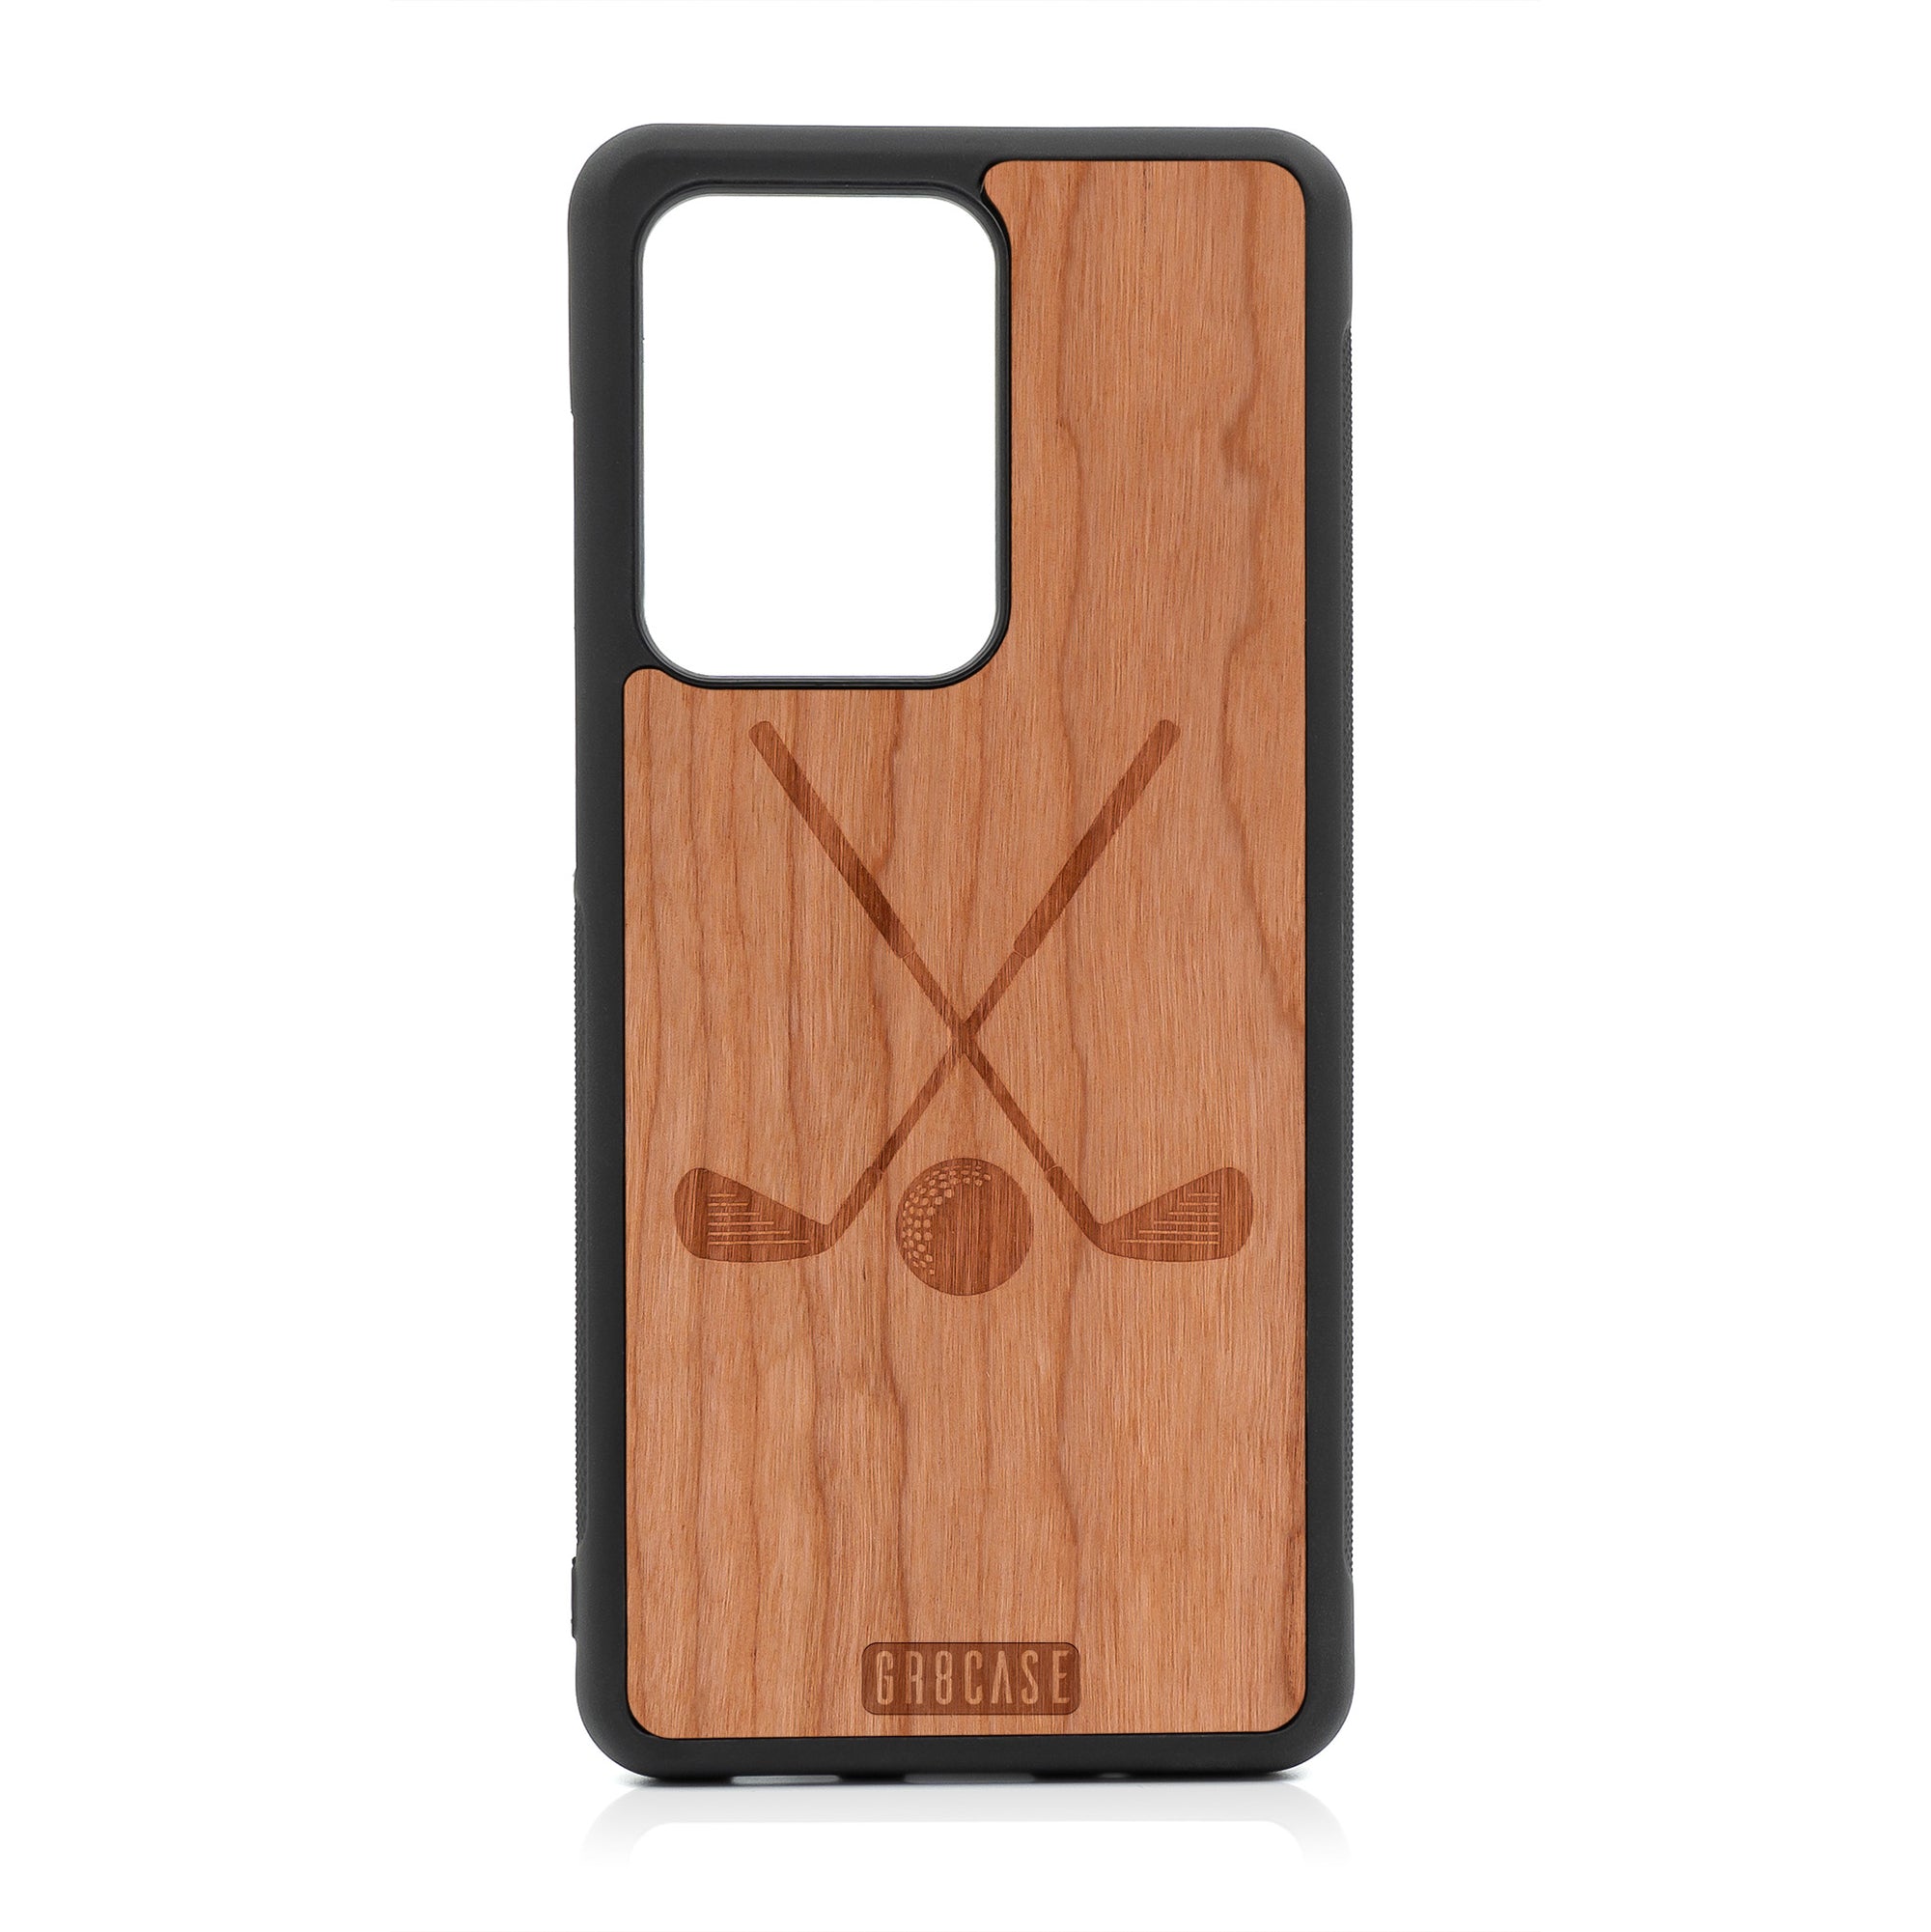 Golf Design Wood Case For Samsung Galaxy S20 Ultra by GR8CASE